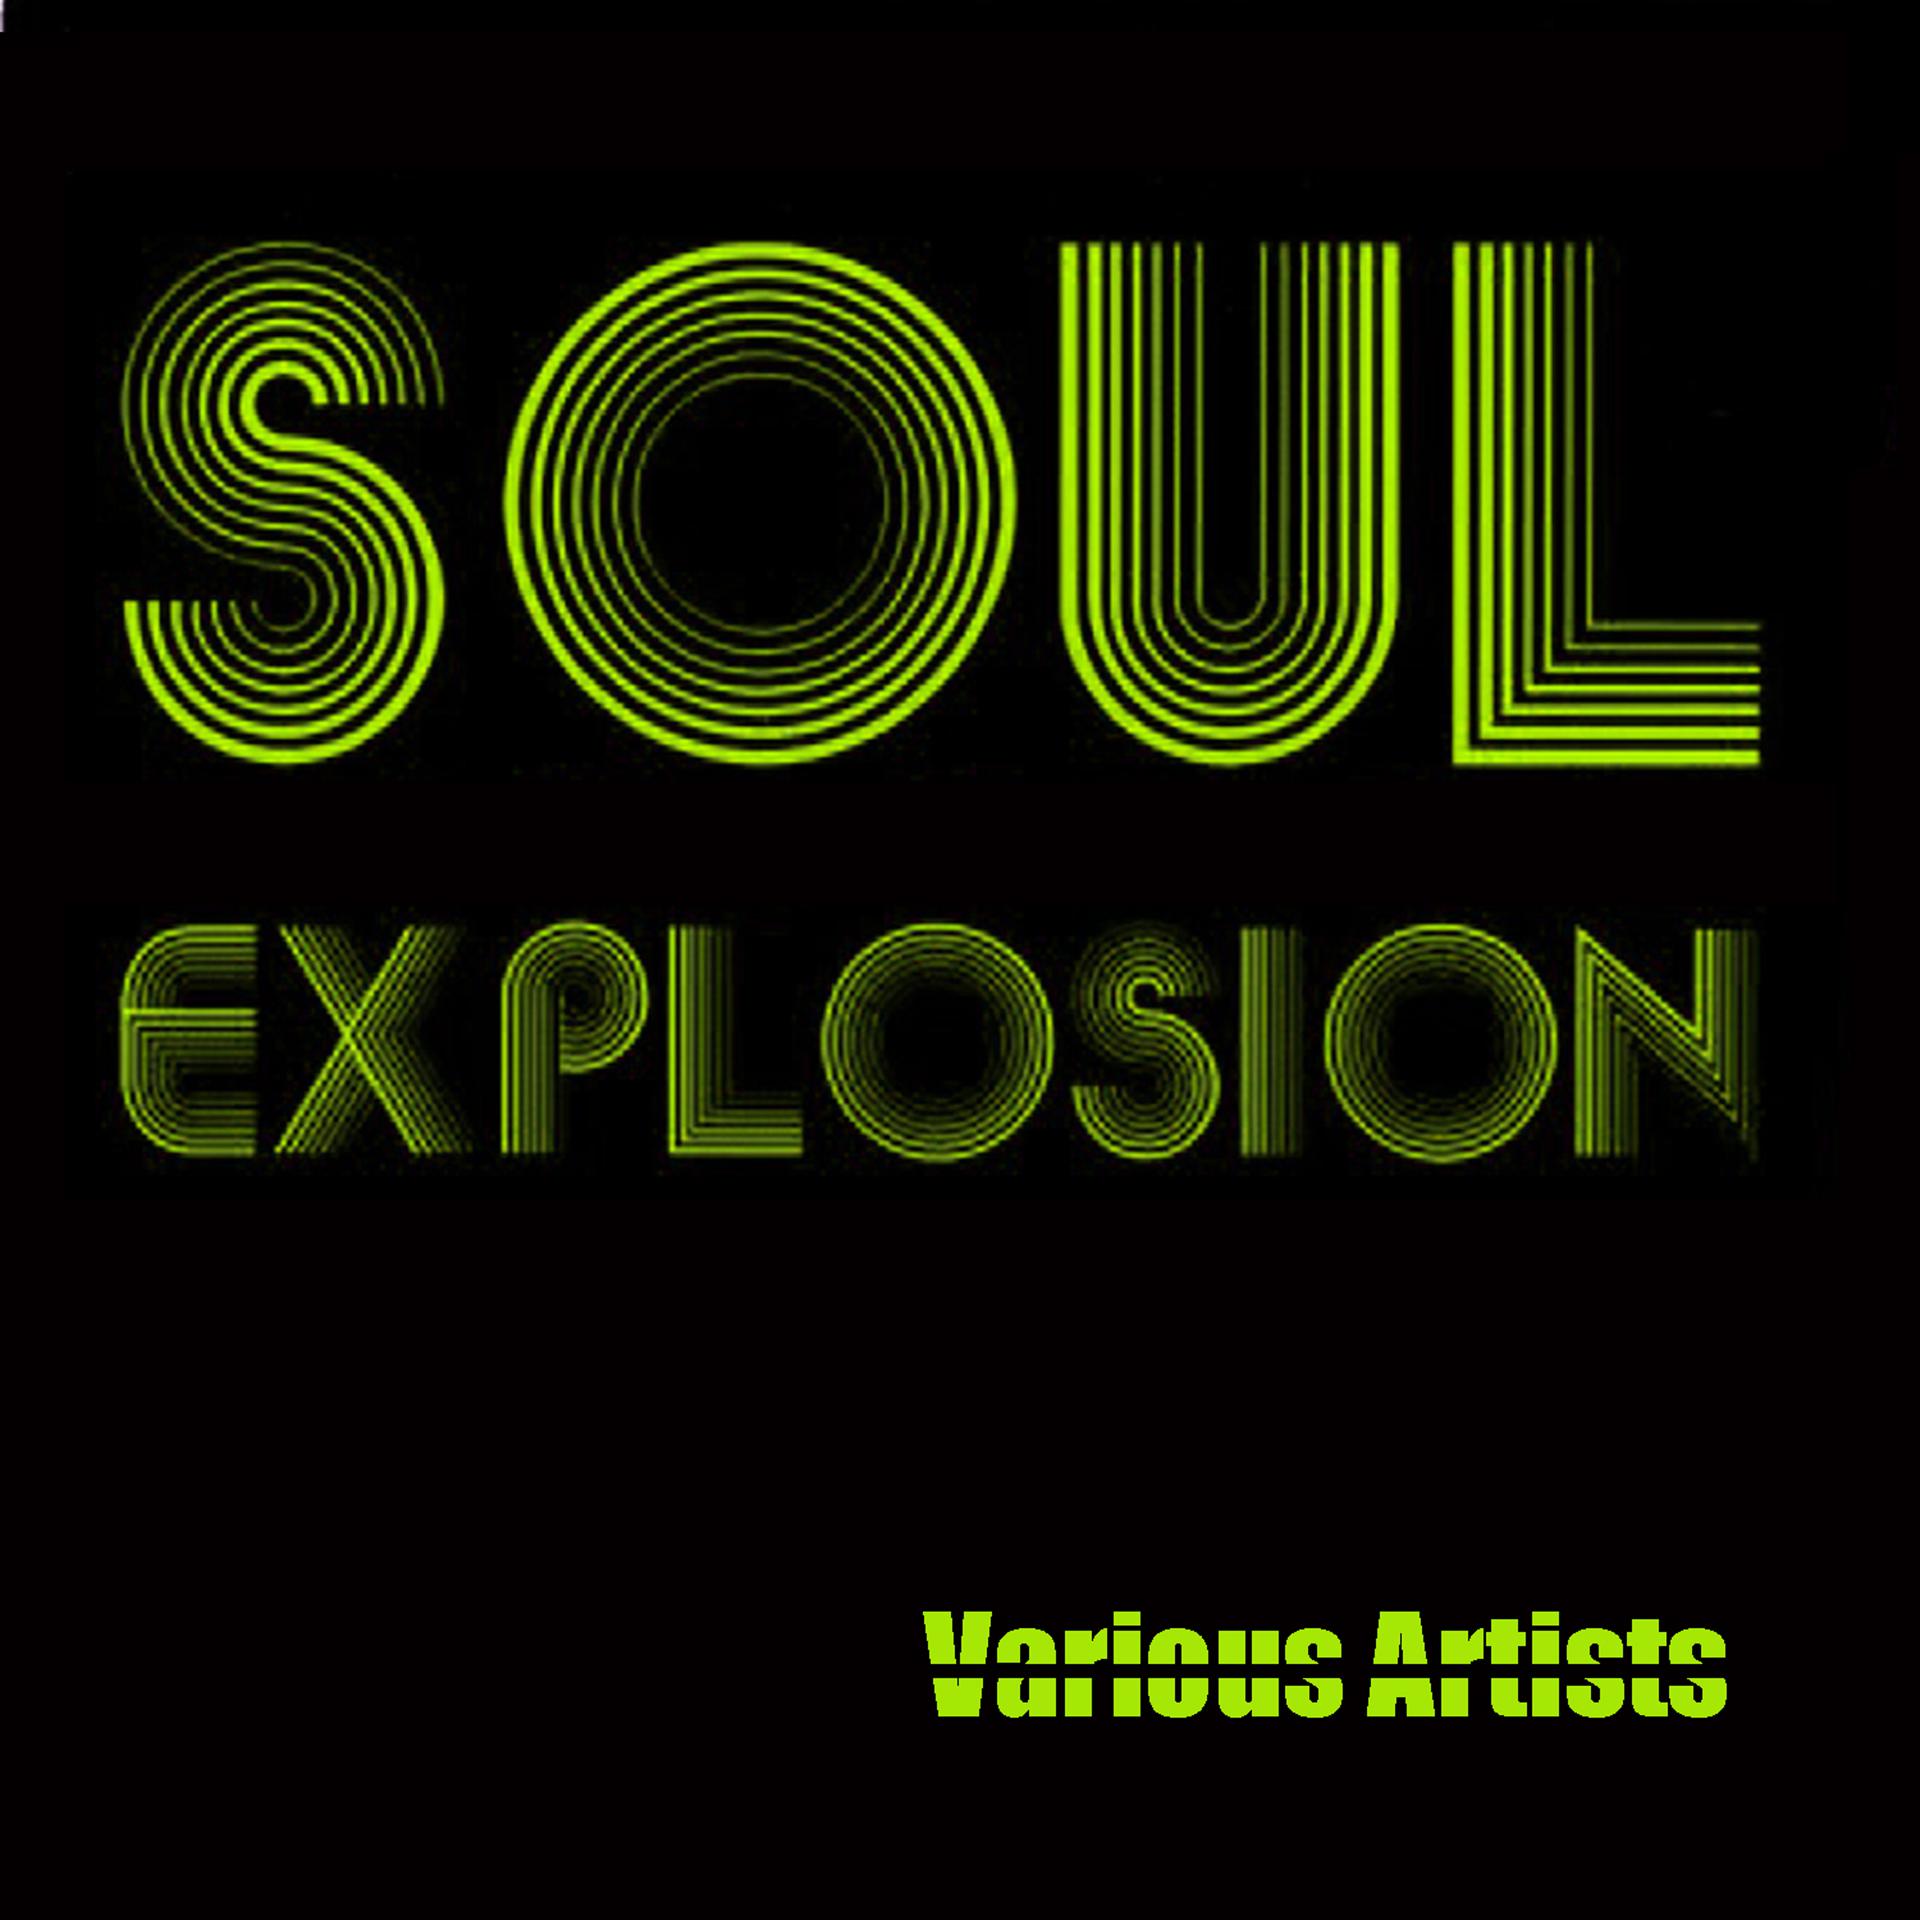 Постер альбома Soul Explosion